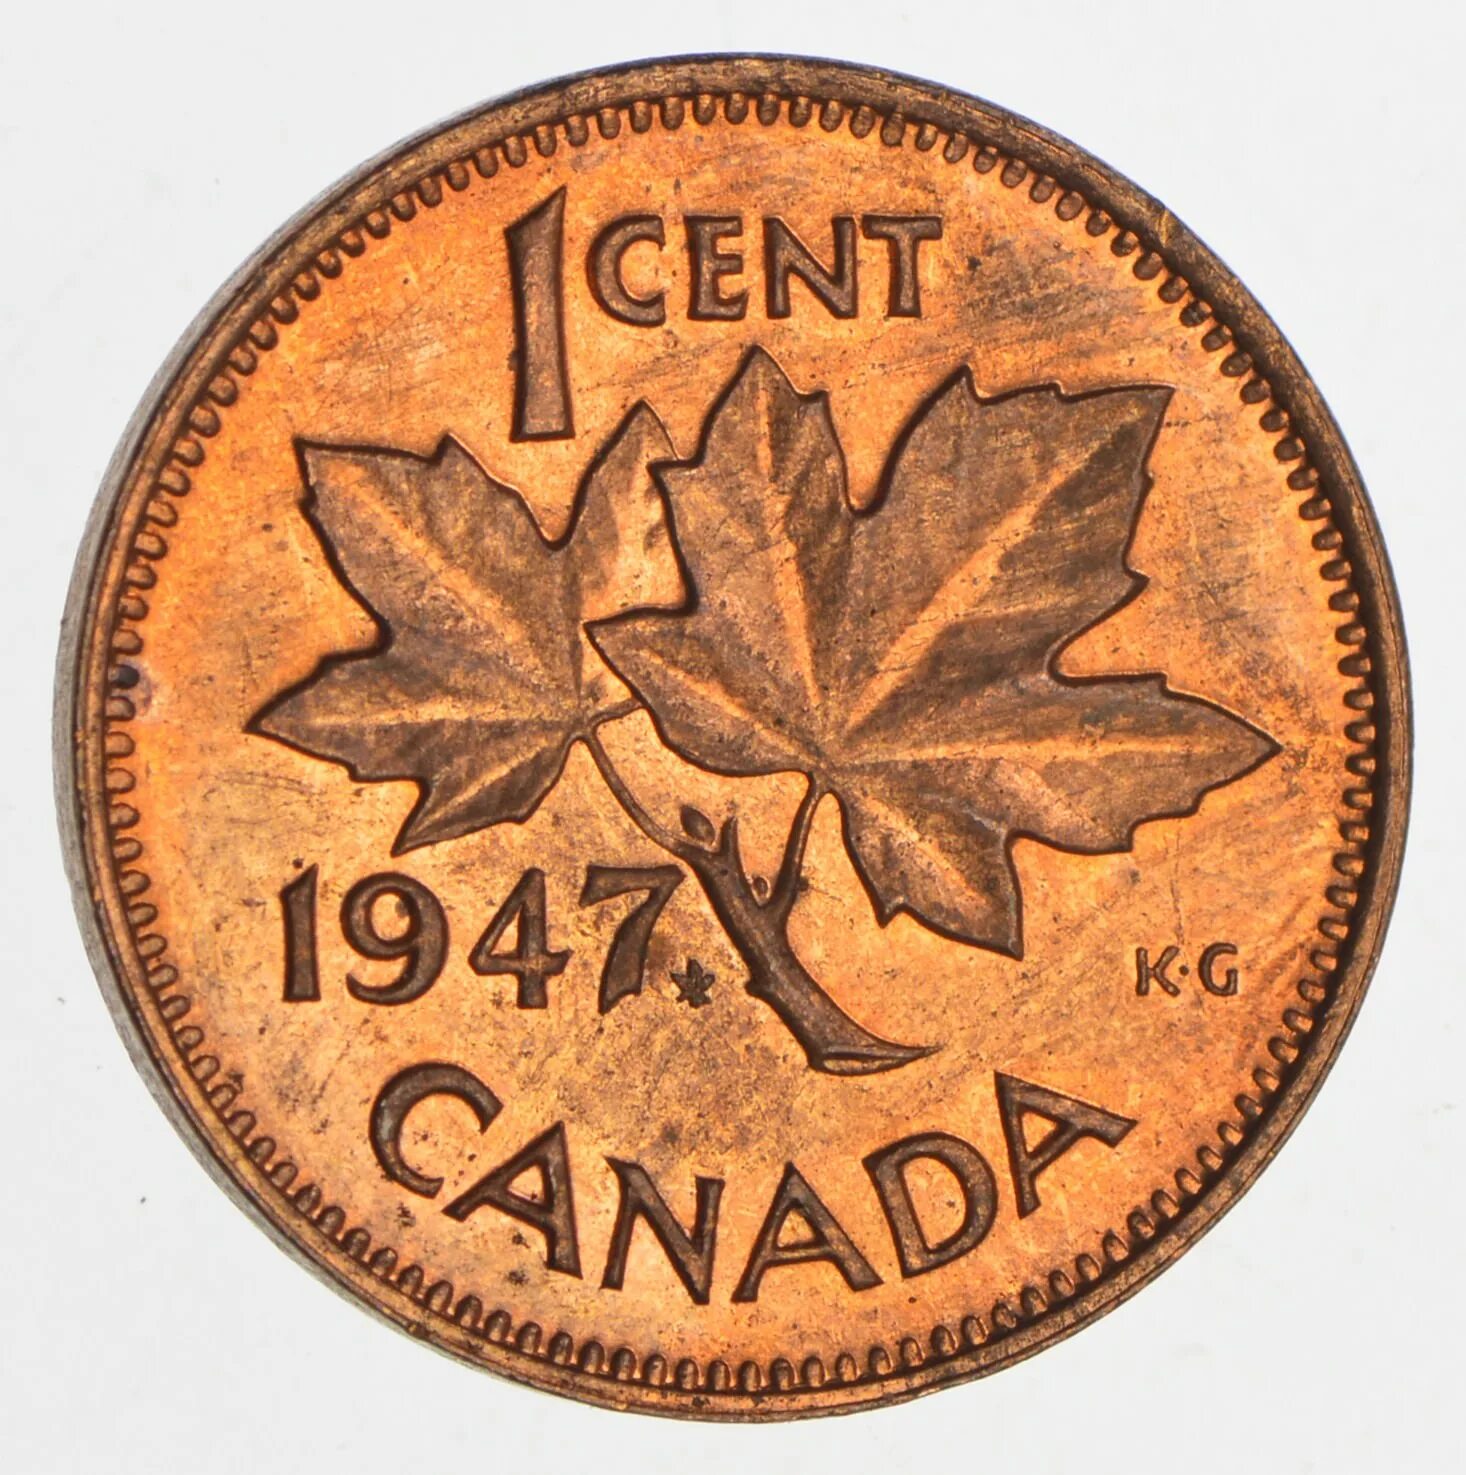 1 cent. Один канадский цент. Канада 1 цент 1937-1947 год. 1 Канадский цент монета. Канадский пенни.